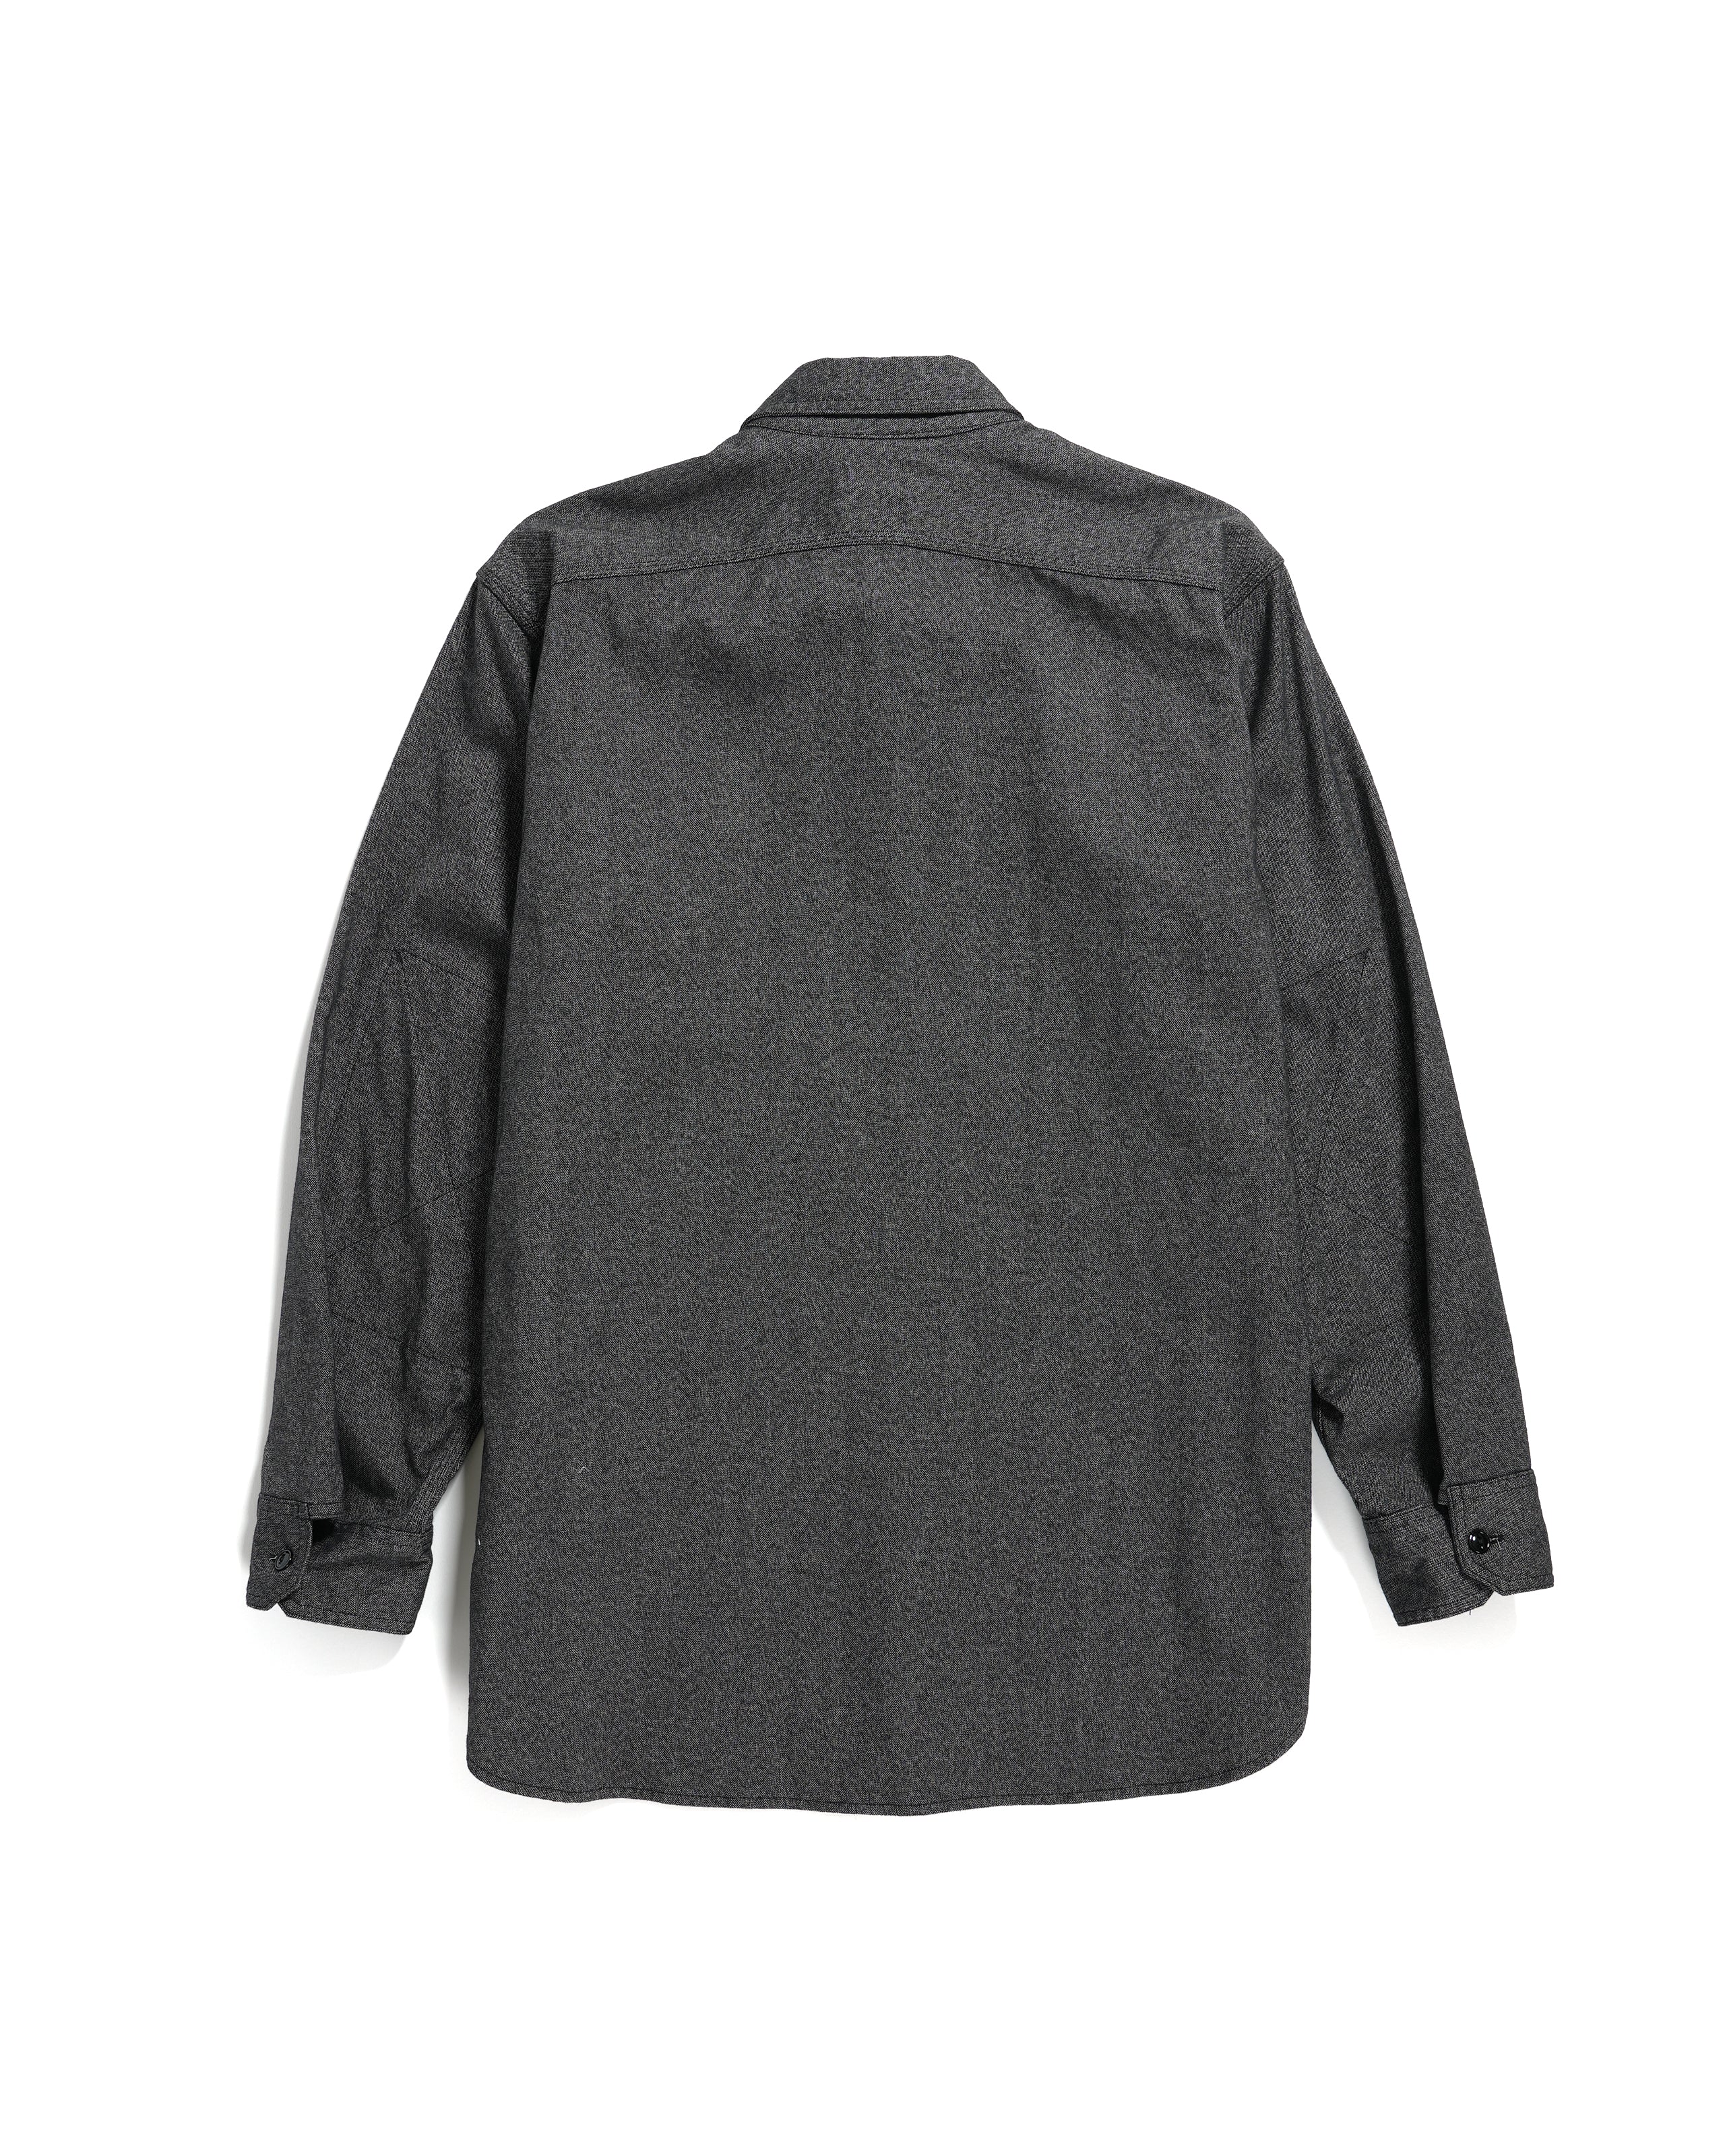 Work Shirt - Heather New York Cotton Heavy Nepenthes Grey 